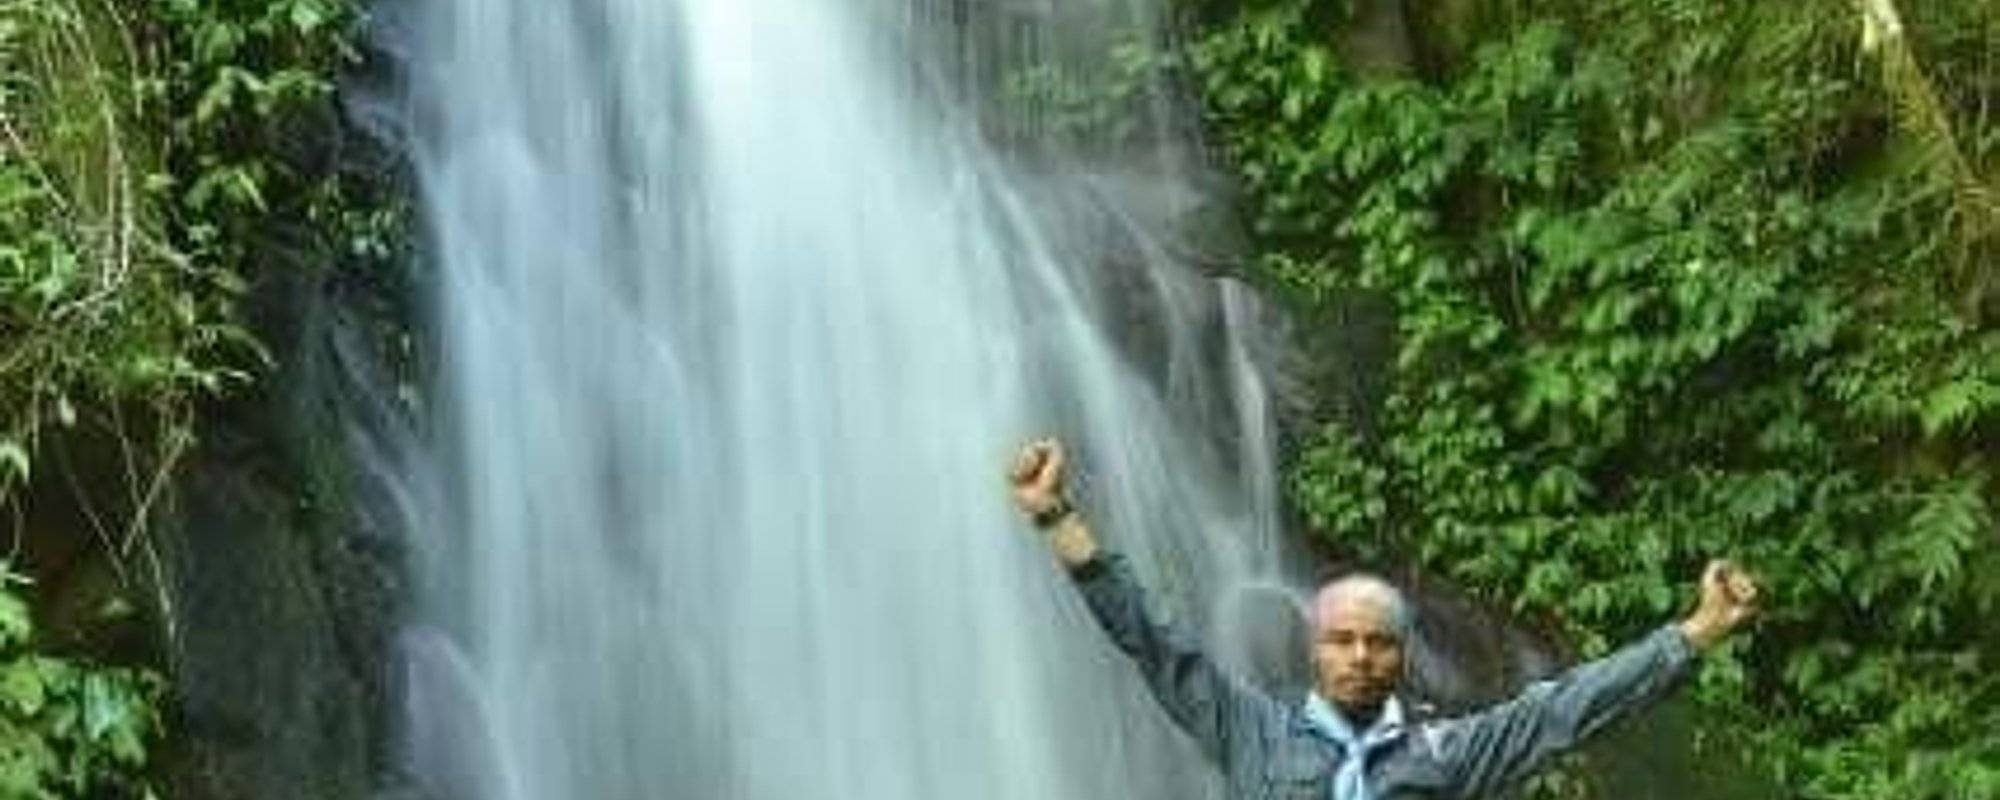 Expedition Waterfall Lampahan, Bener Meriah Indonesia.